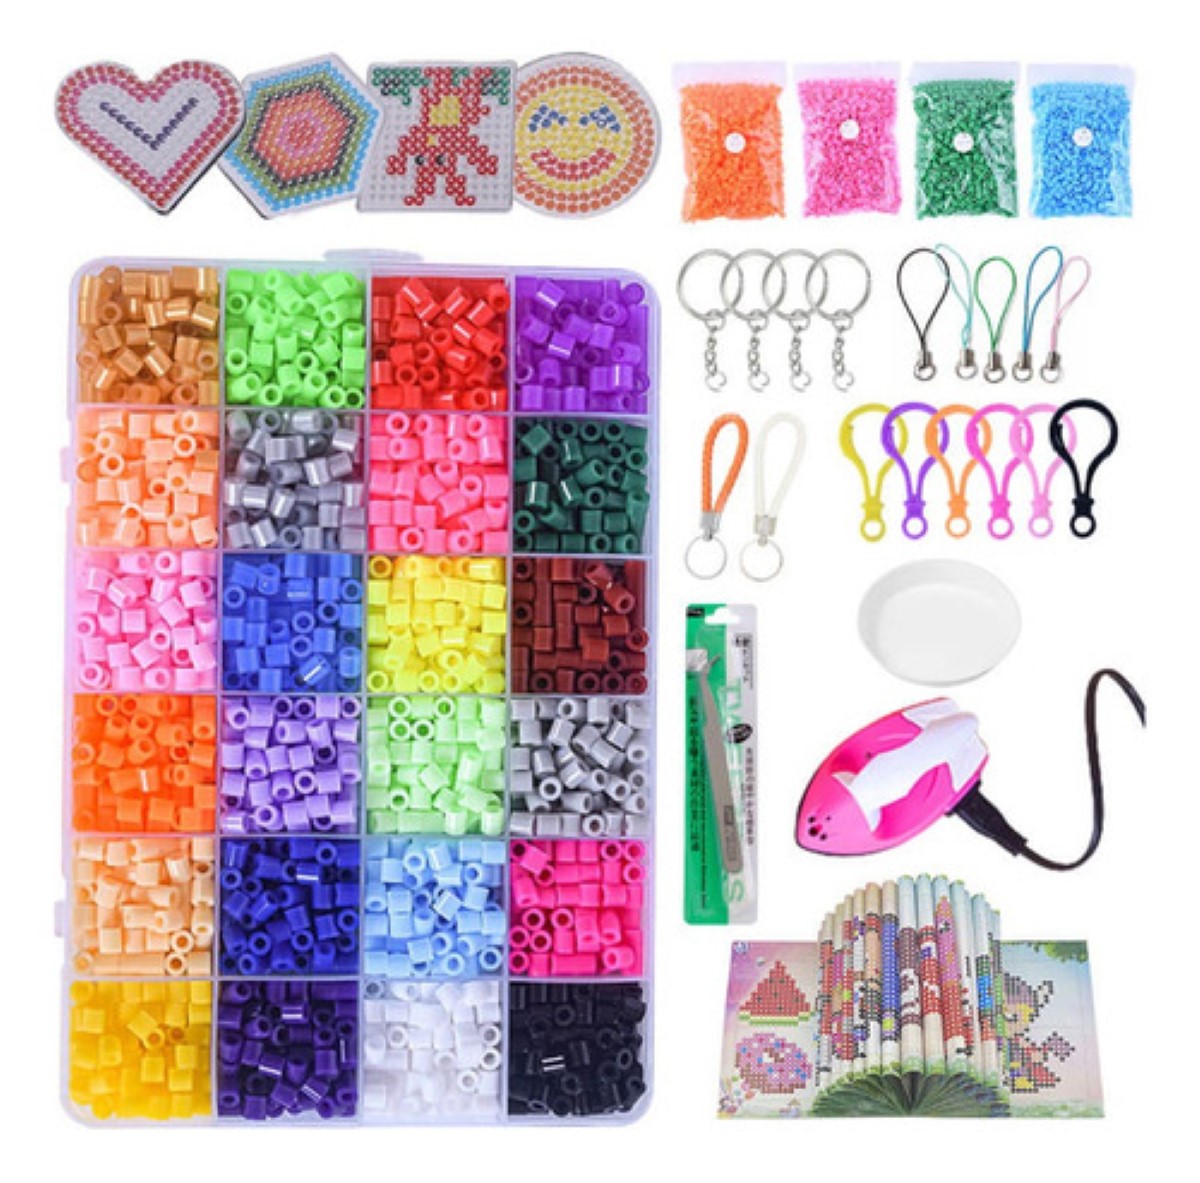 Kit Hama Perl Lote Mini Hama Beads De 2.6 Mm 48000 Piezas